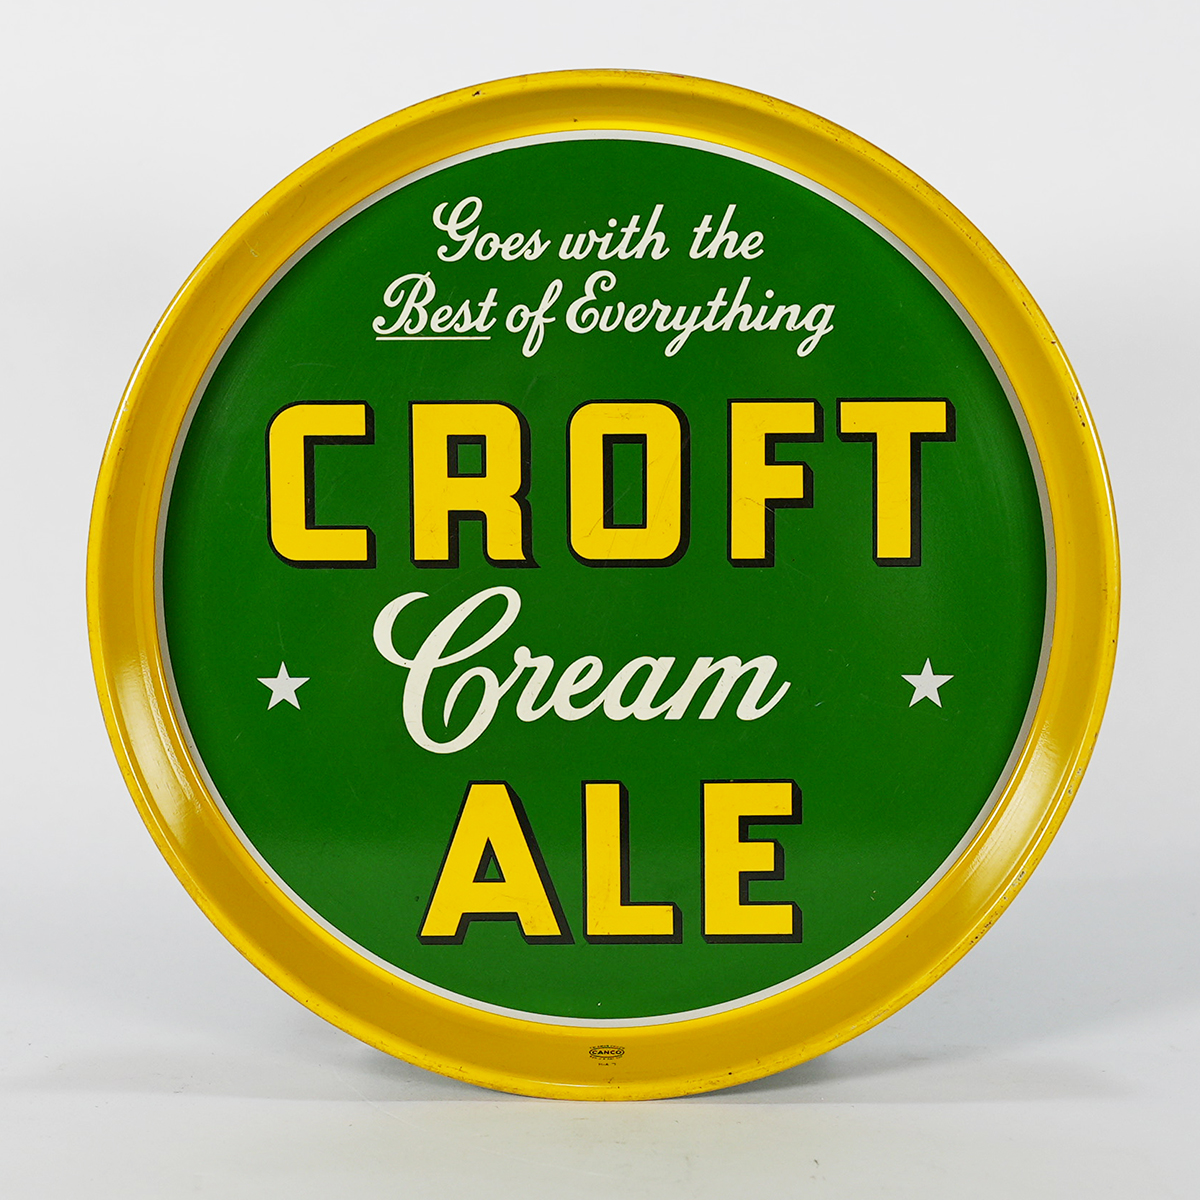 Croft Cream Ale Advertising Tray